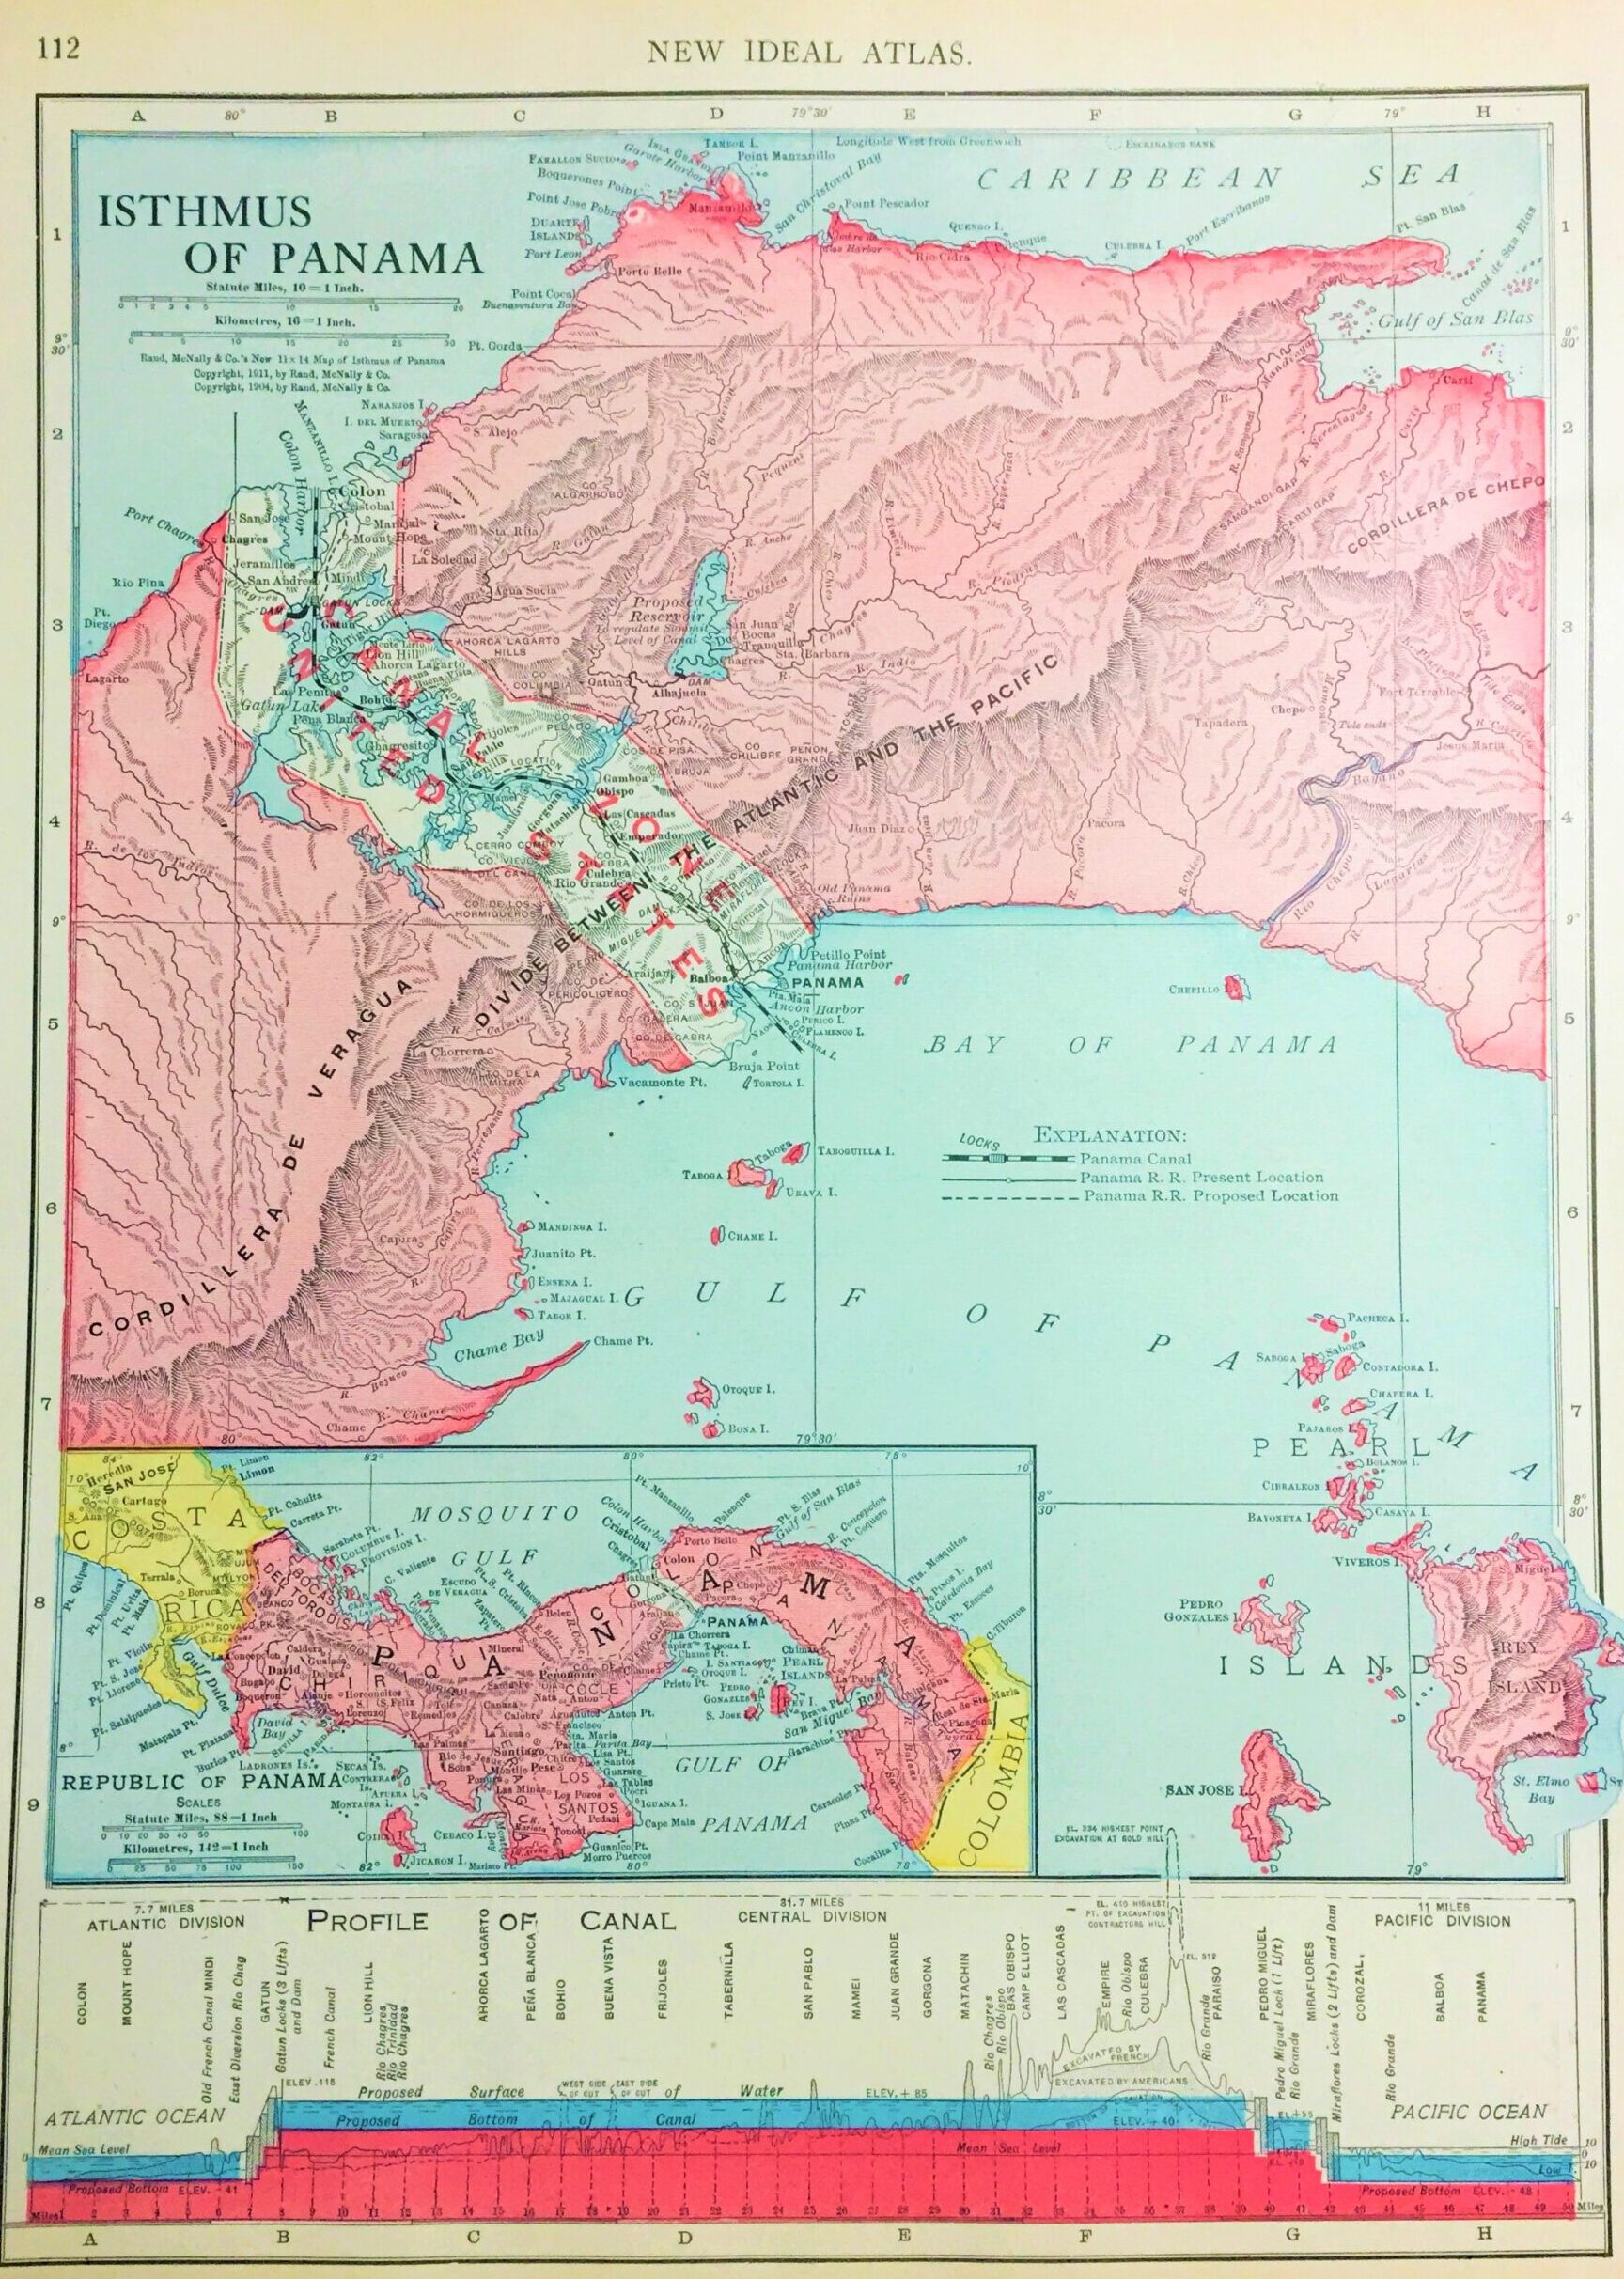 Isthmus of Panama (New Ideal Atlas)